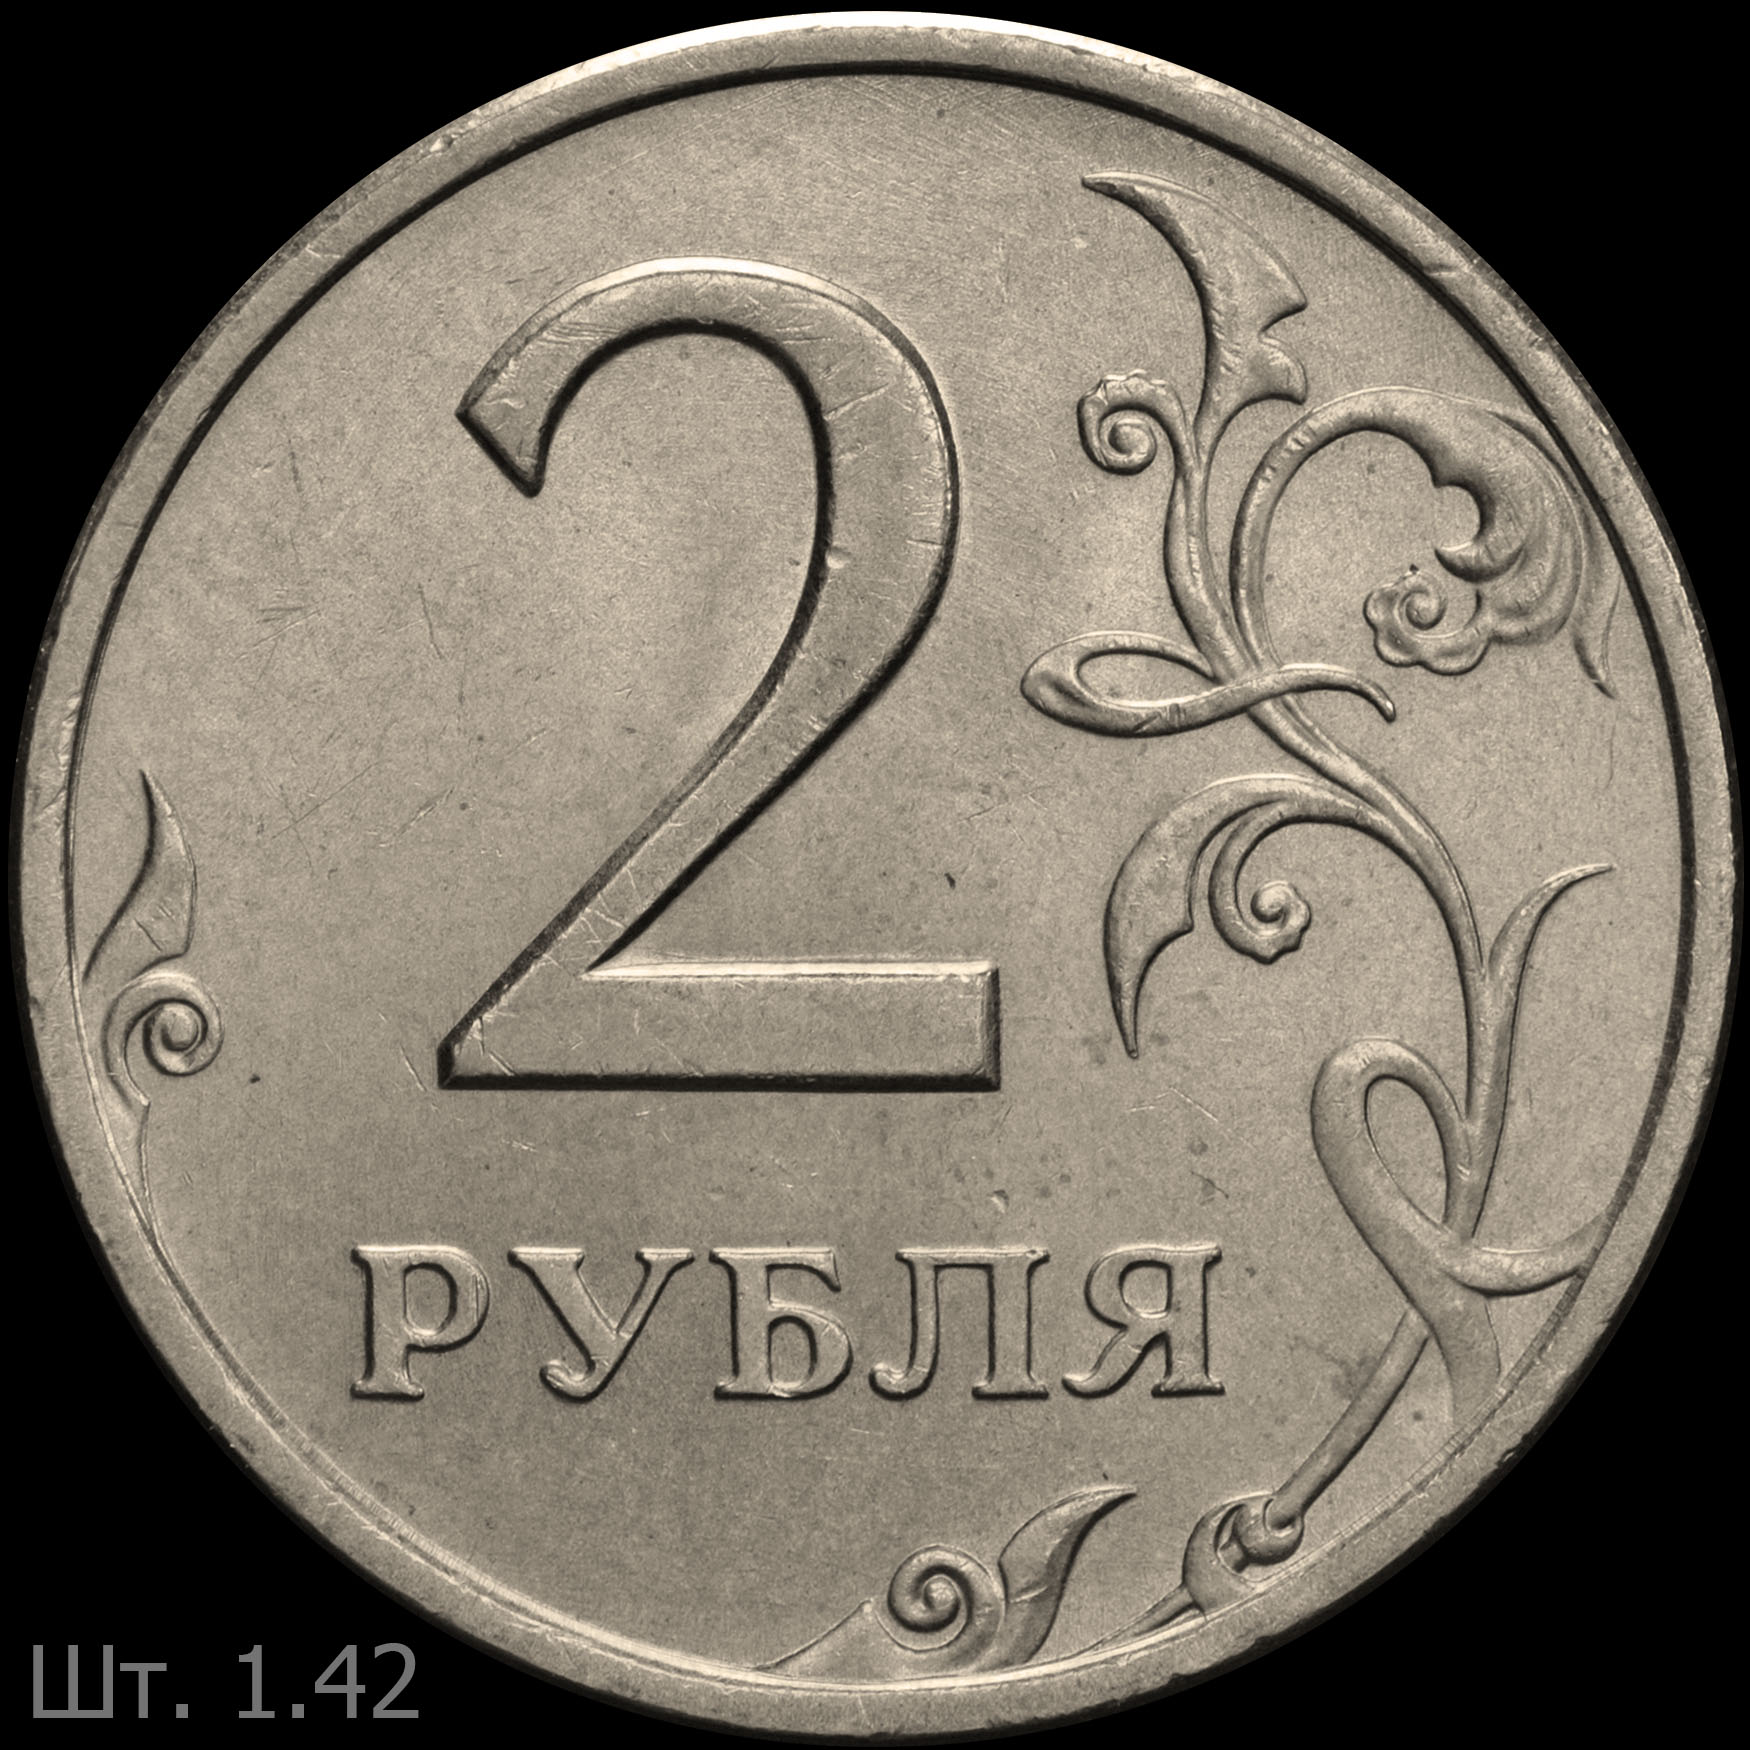 2 Рубля. 2 Рубля 2006. 2 Рубля бумажные. 2 Рубля 2016 СПМД как отличить.